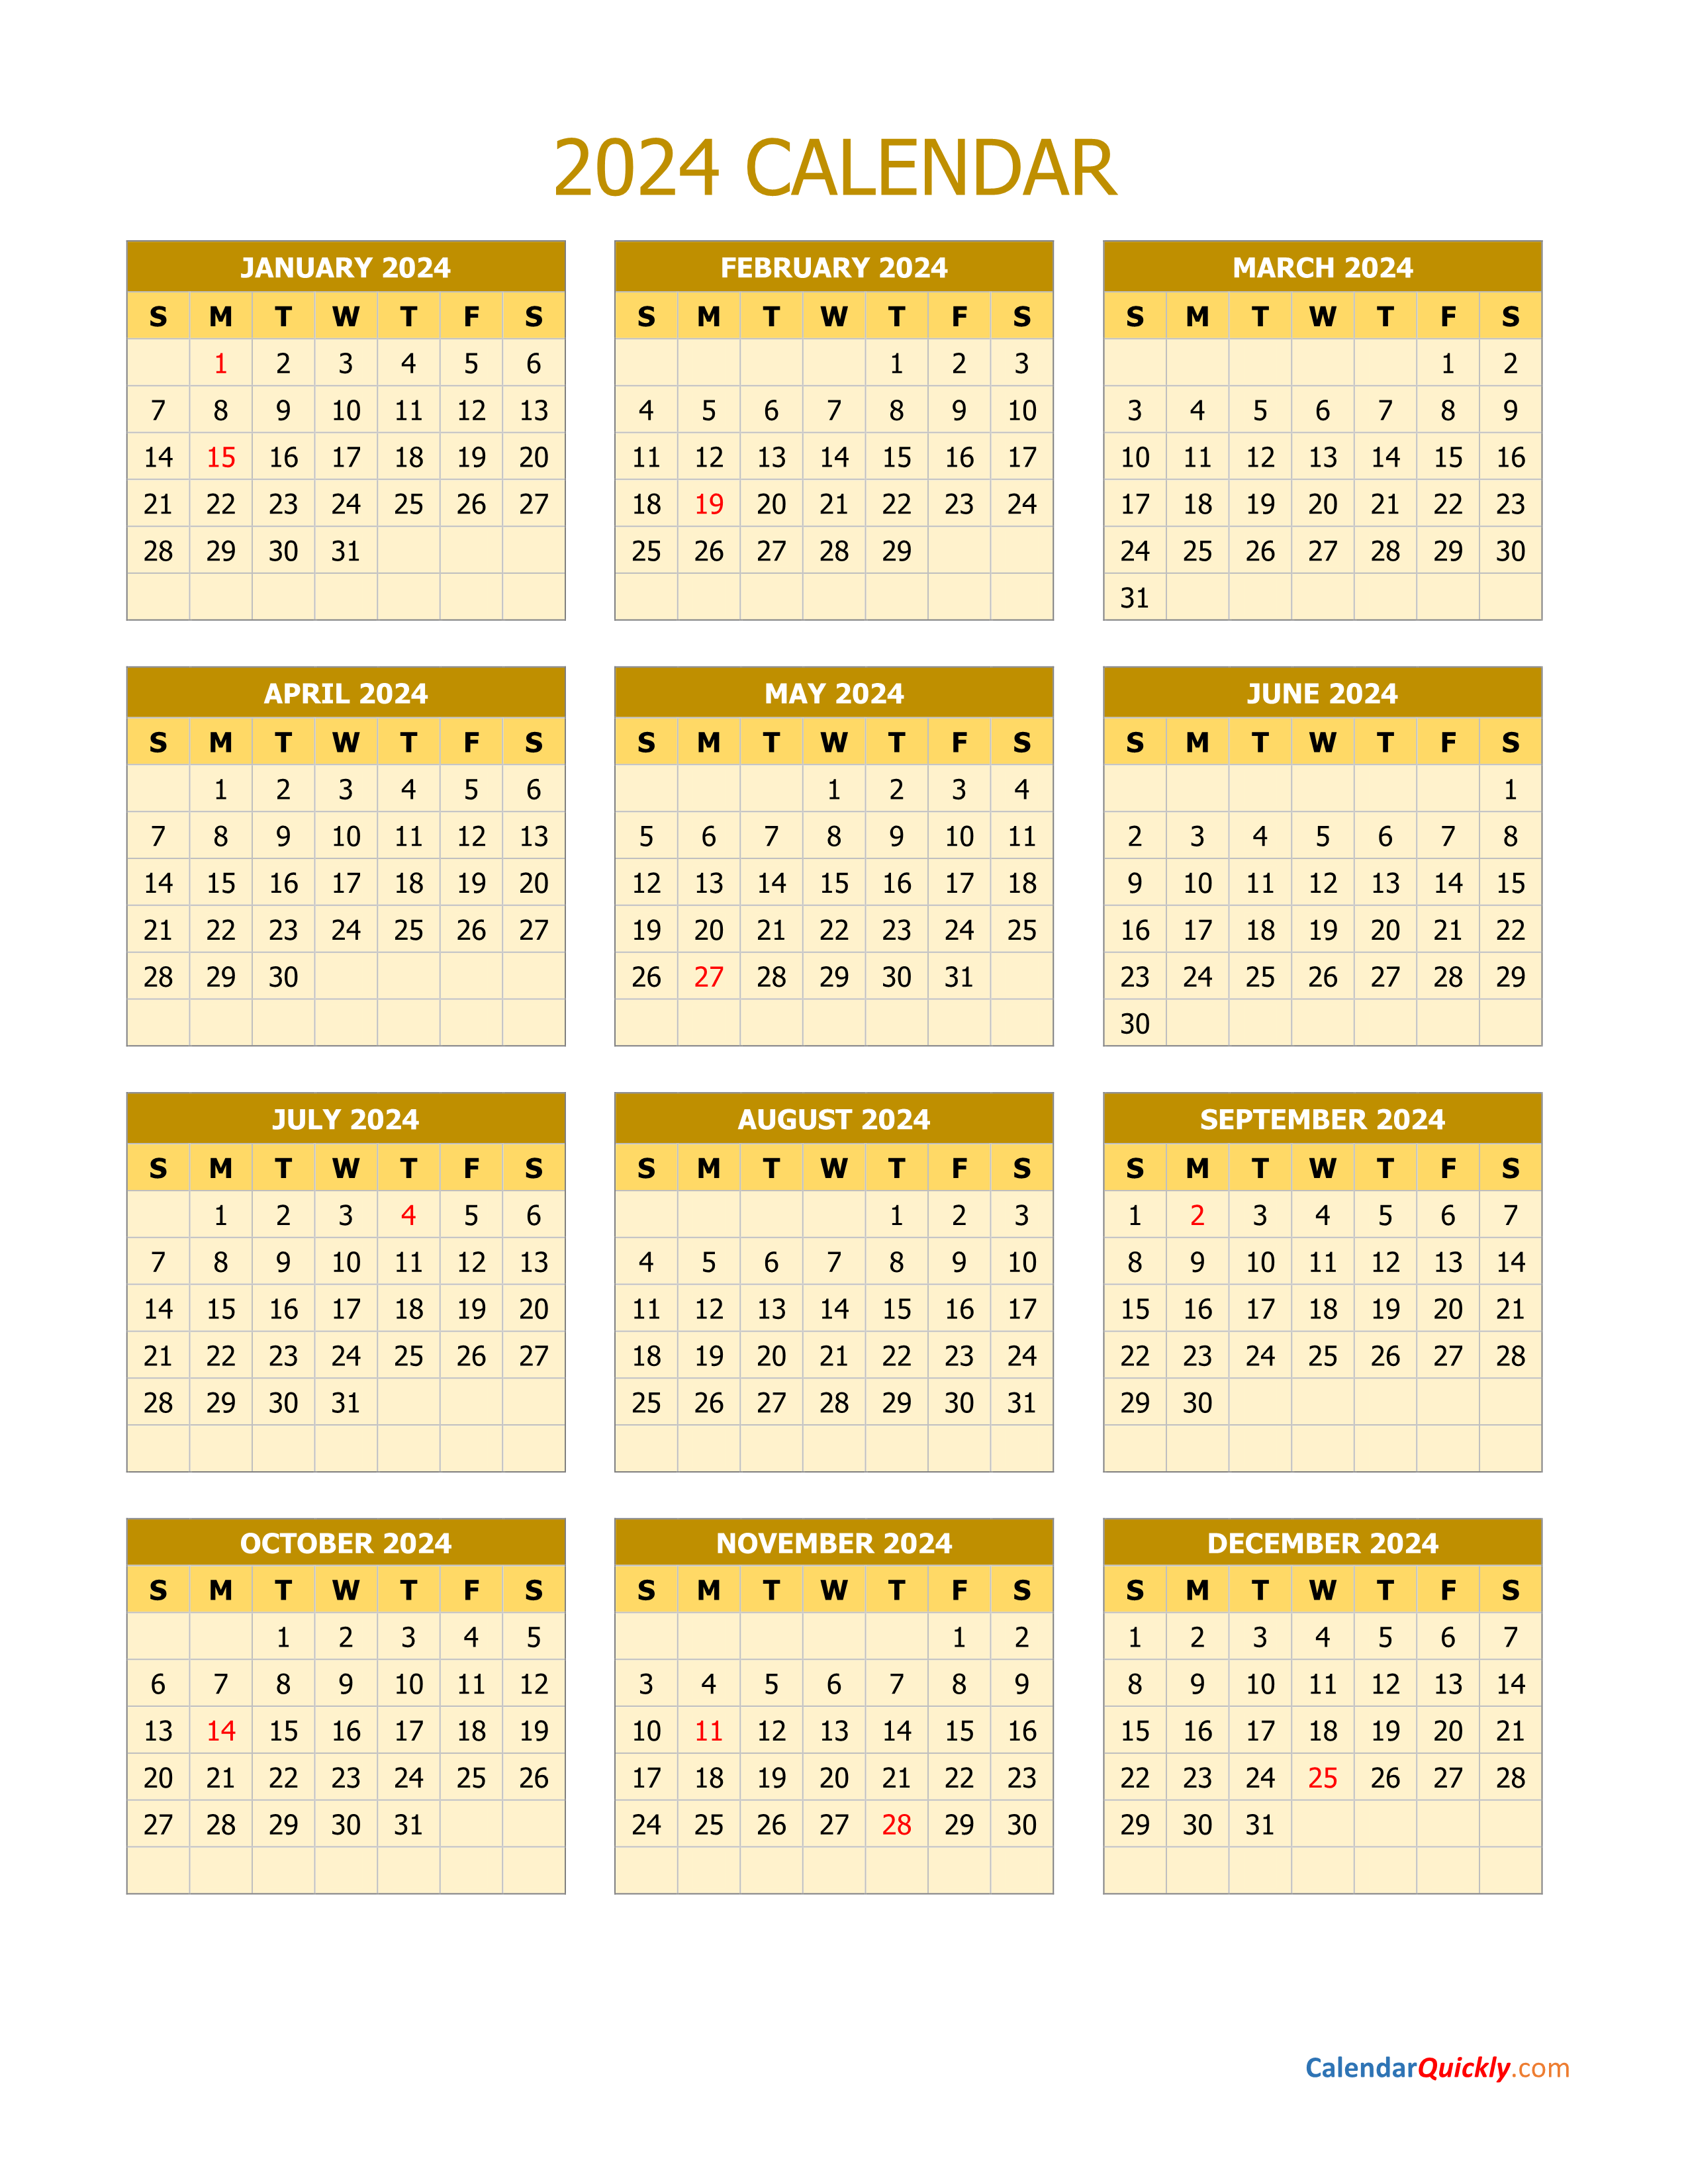 2024 Calendar Vertical Calendar Quickly - Free Printable 2024 Download Calendar Vertical